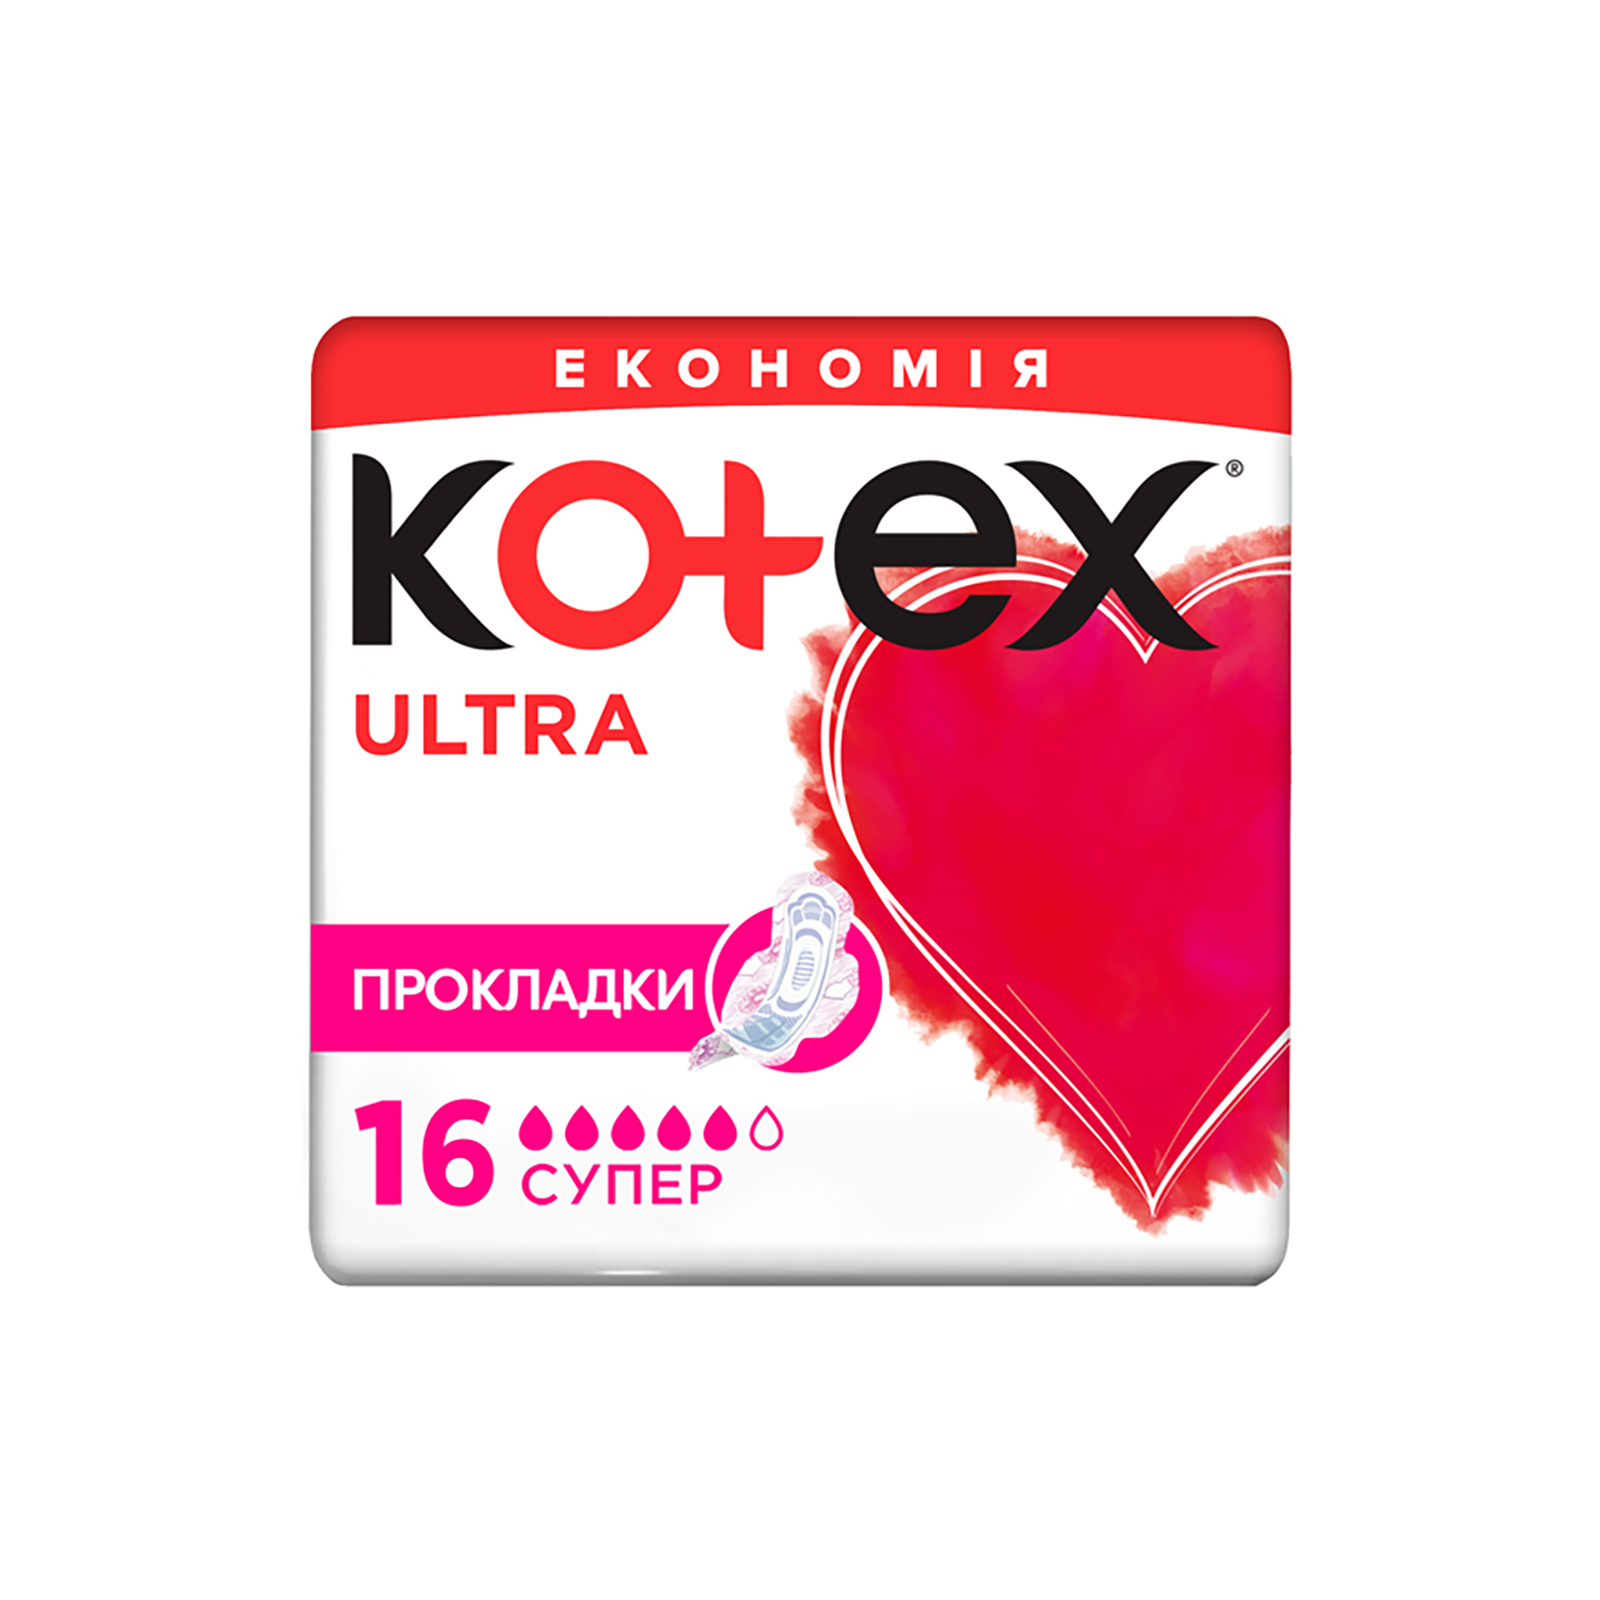 Гигиенические прокладки Kotex Ultra Super 22 шт. (5029053569123)